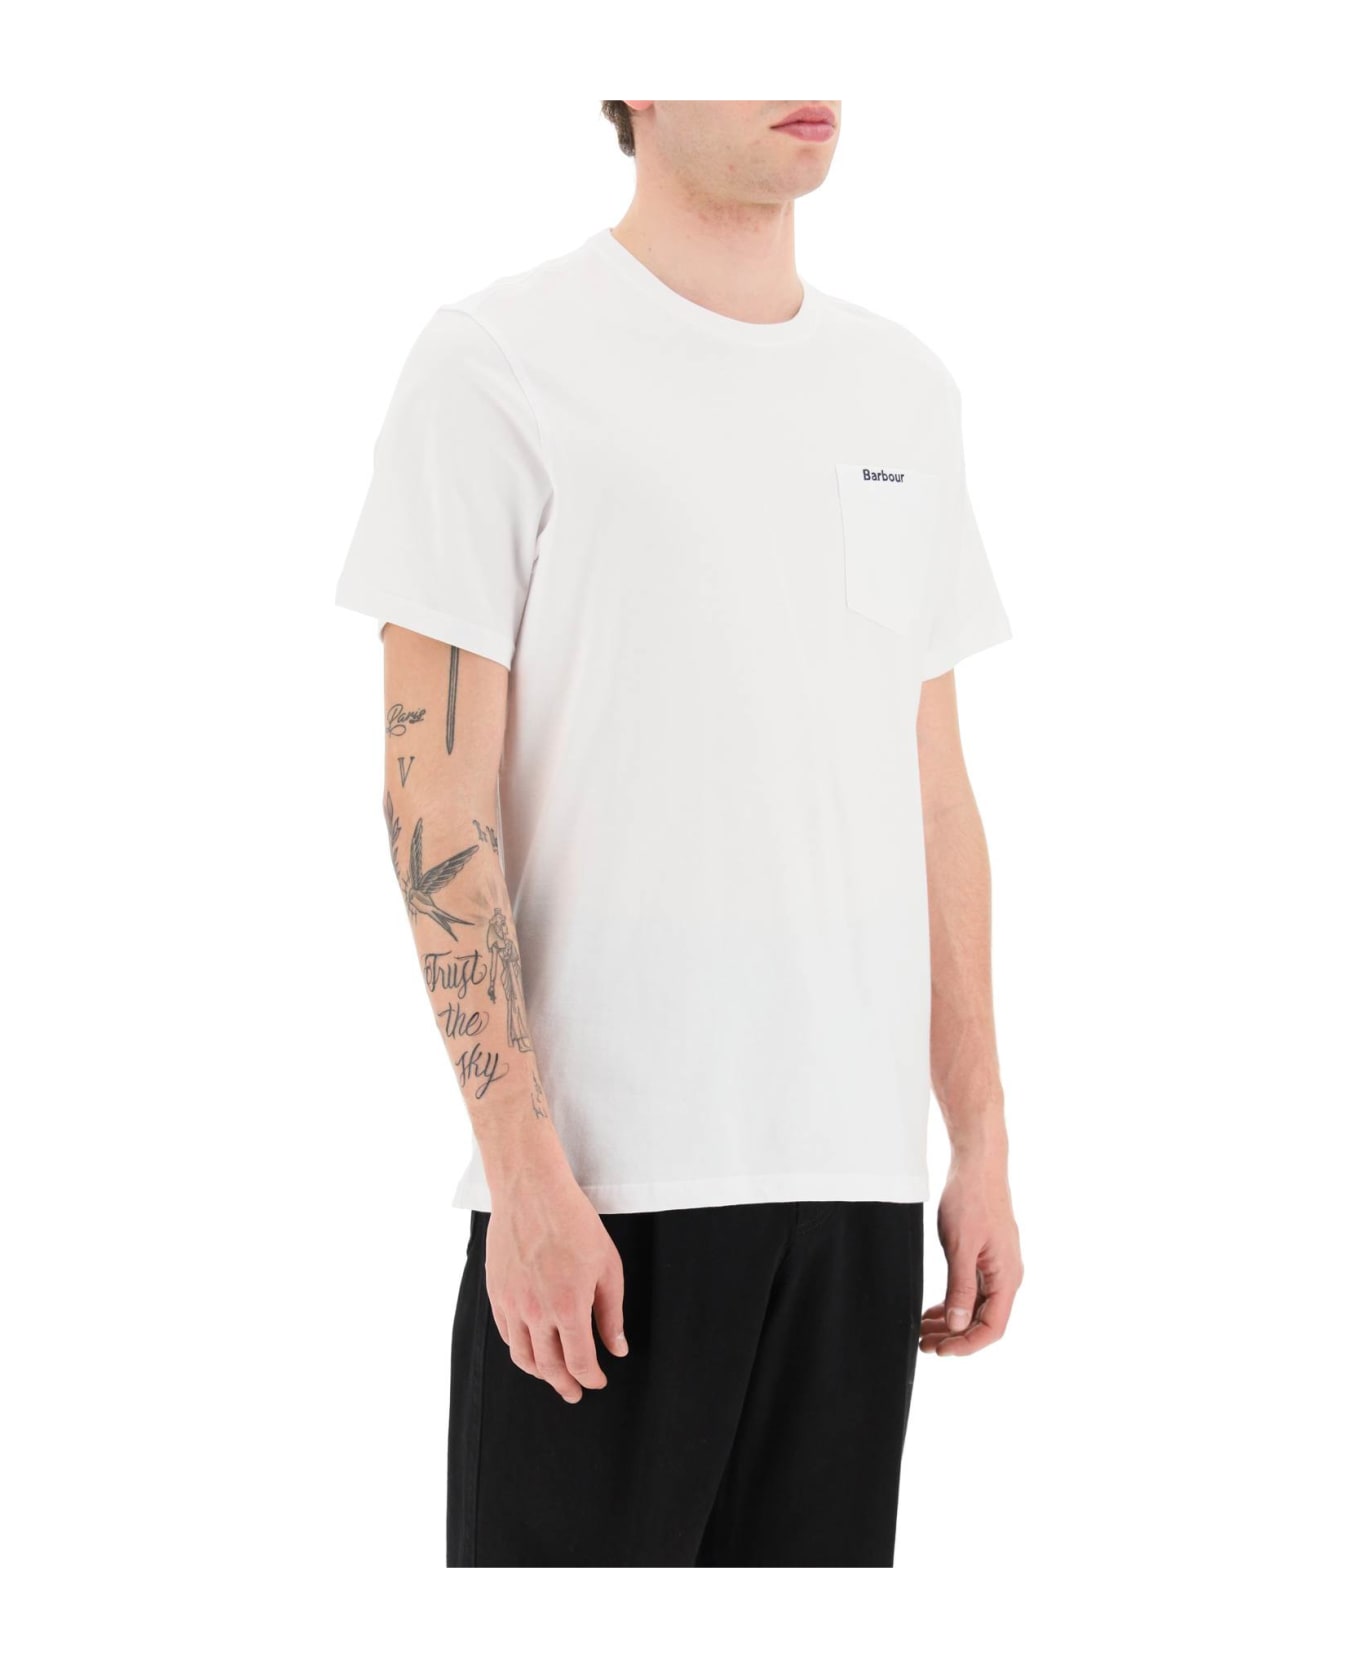 Barbour Classic Chest Pocket T-shirt - WHITE (White)